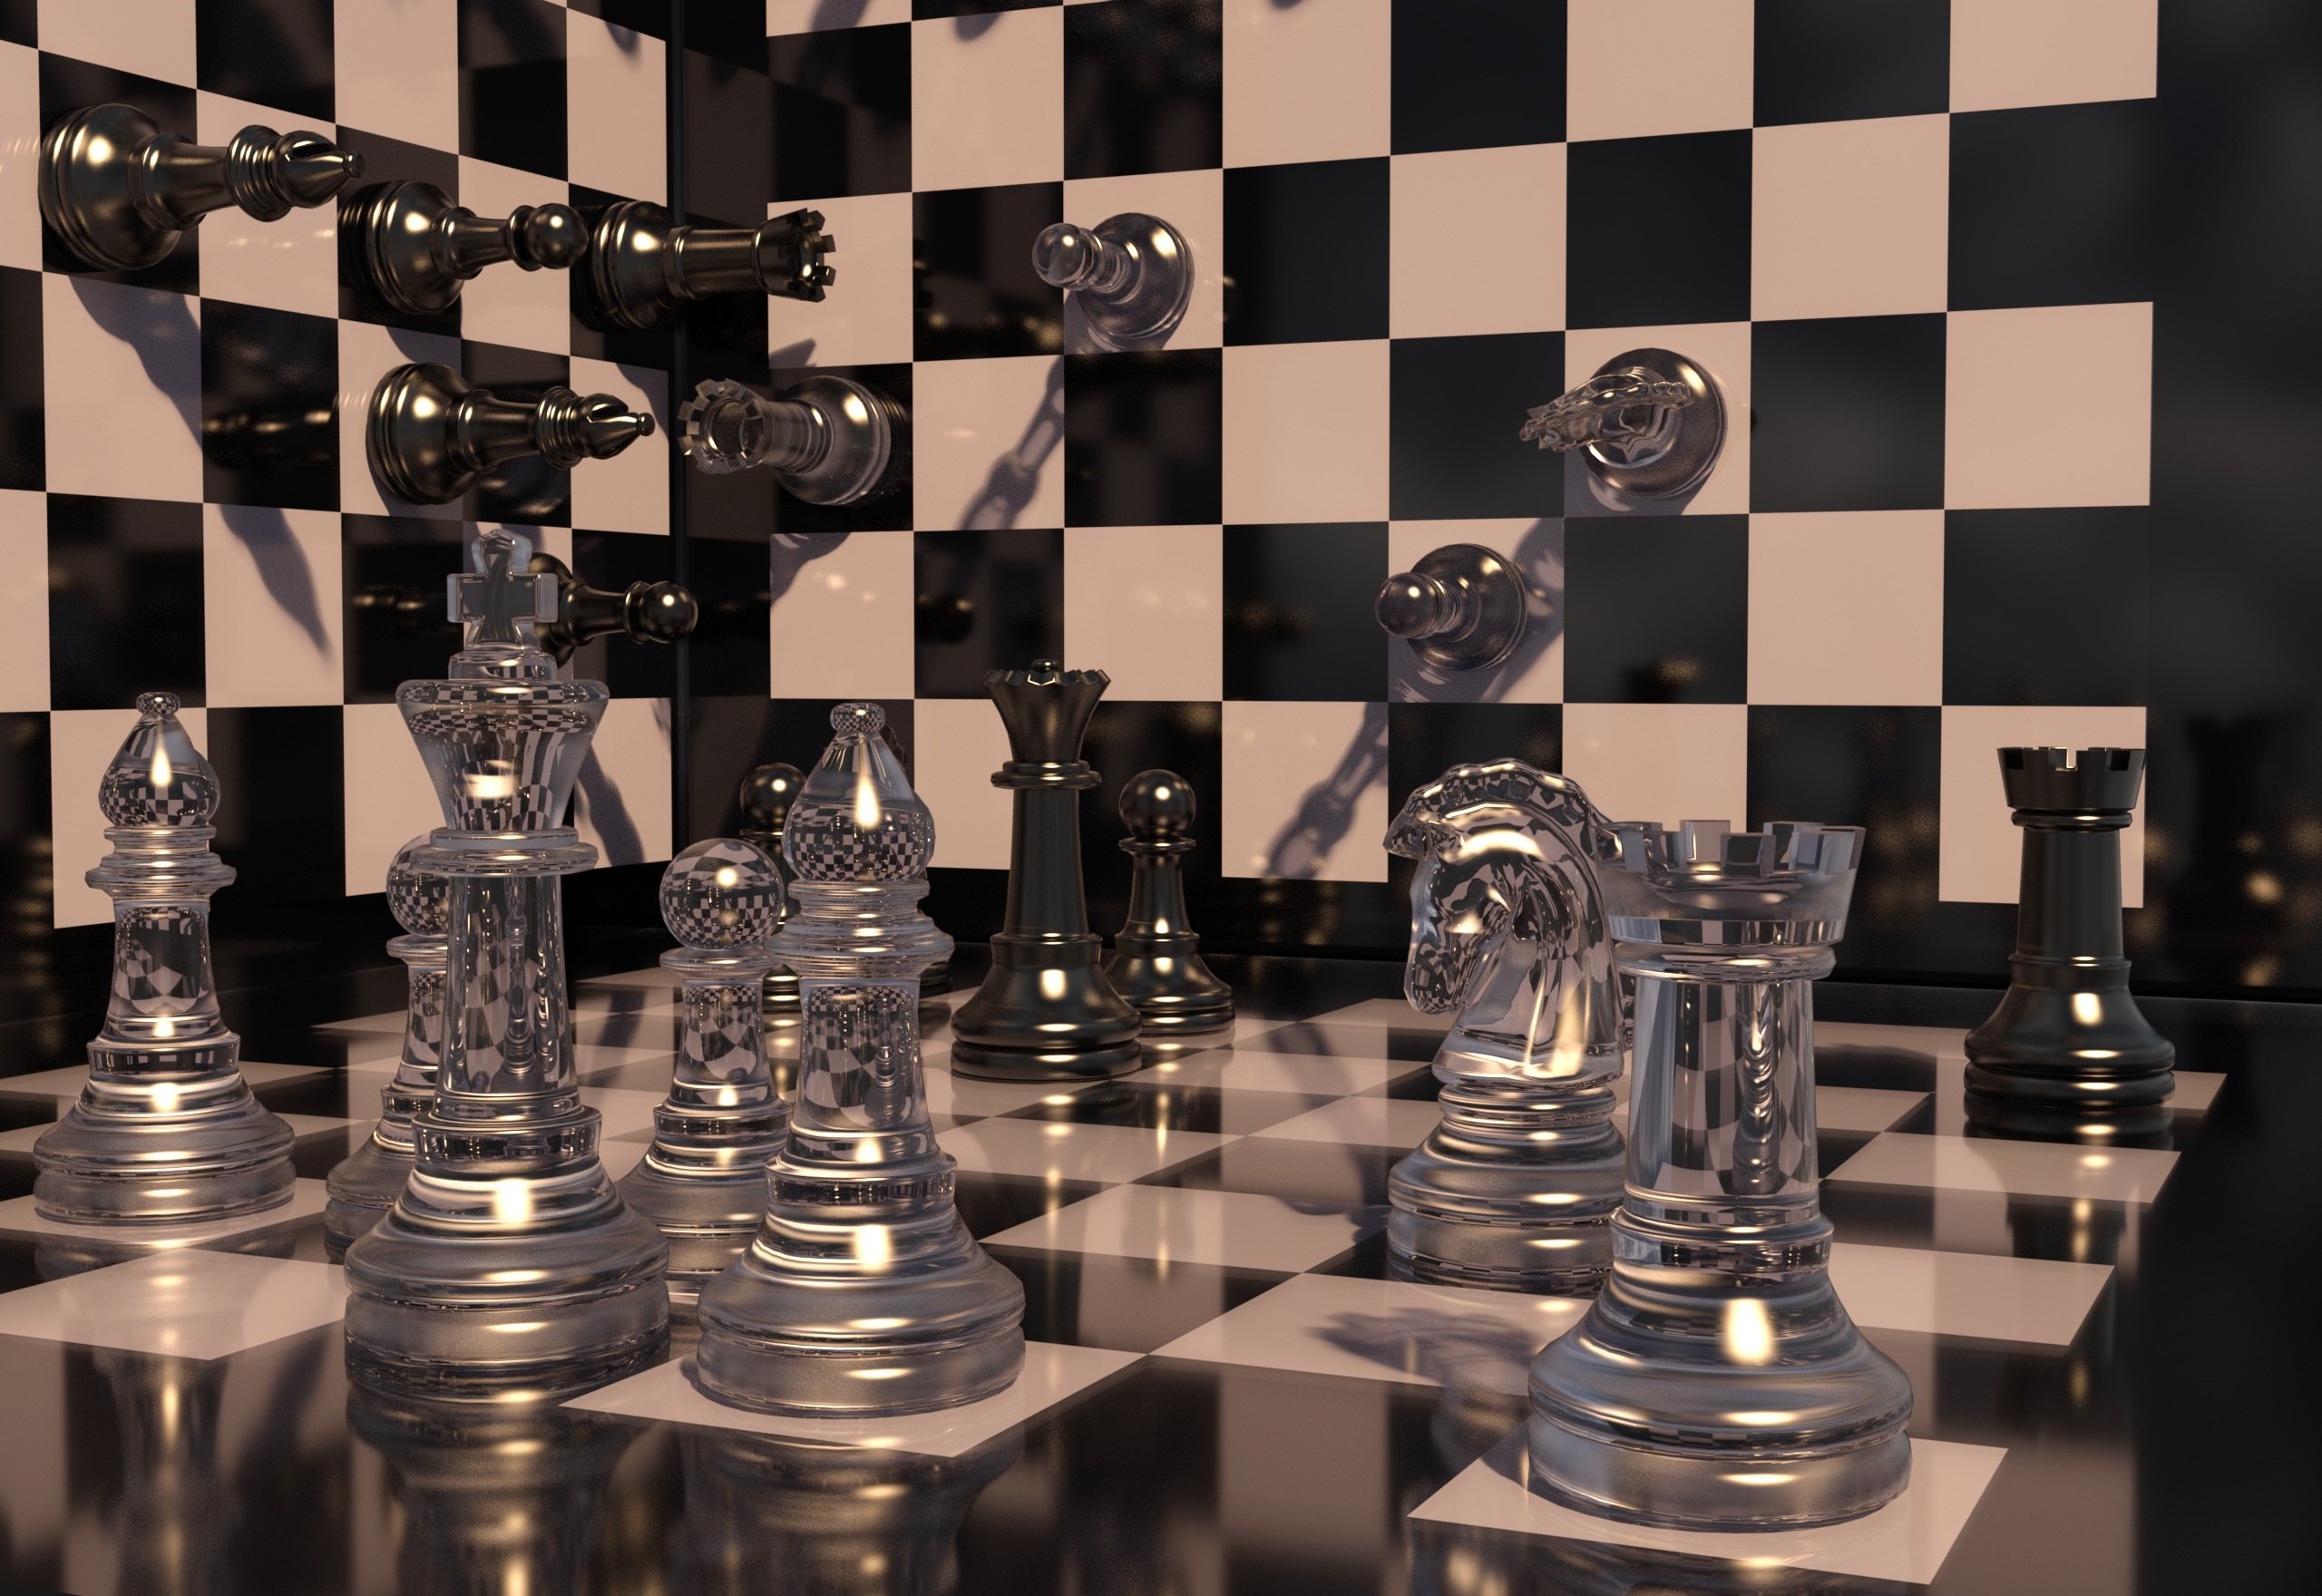 Шахматная доска на экране монитора. Великая шахматная доска 1997. Шахматный фон. Шахматные фигуры. Красивая шахматная доска.